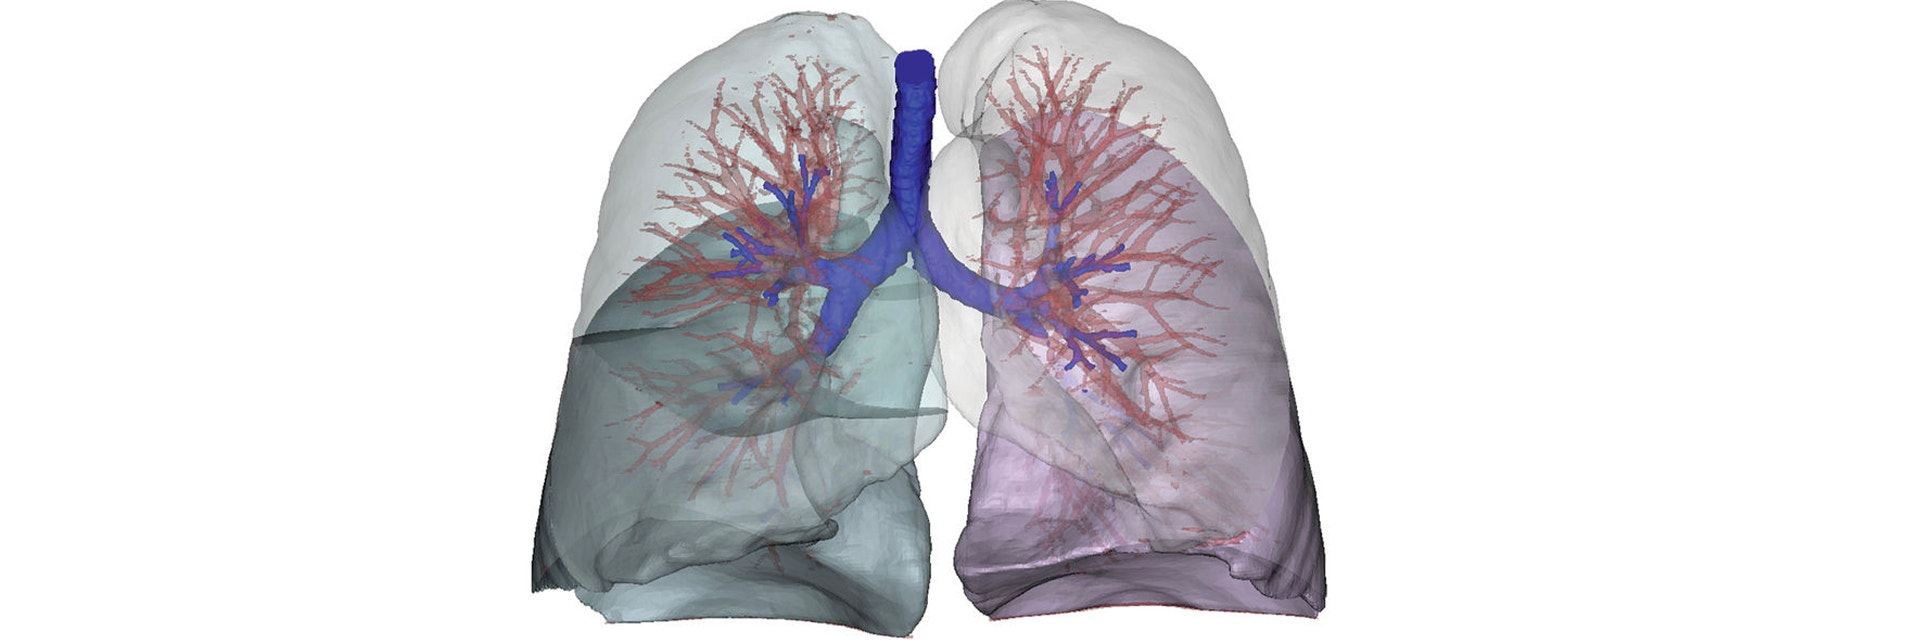 Digital image of lung anatomy